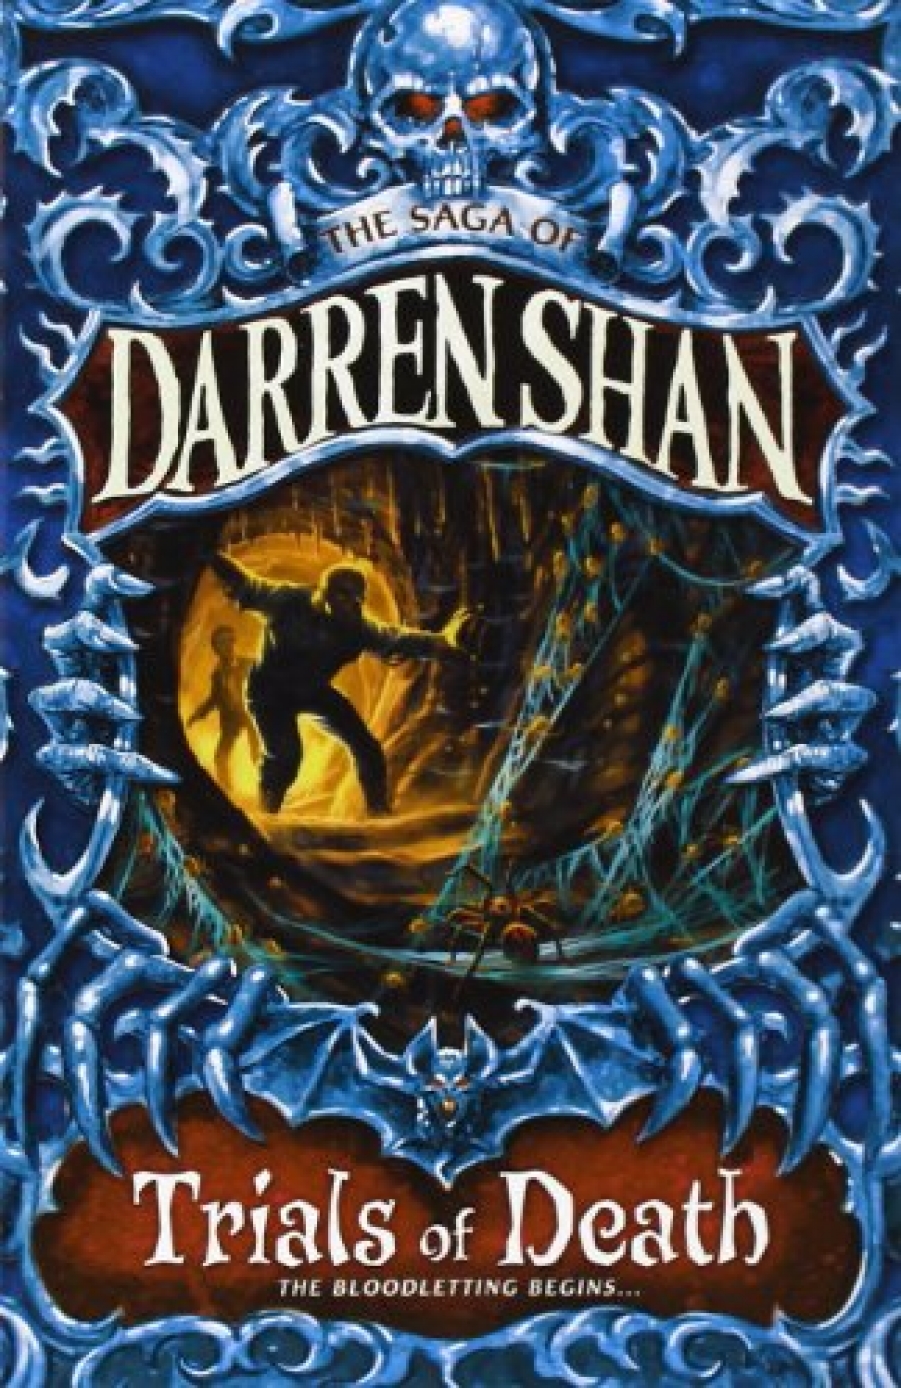 Darren Shan The Saga of Darren Shan, Volume 5.Trials of Death 